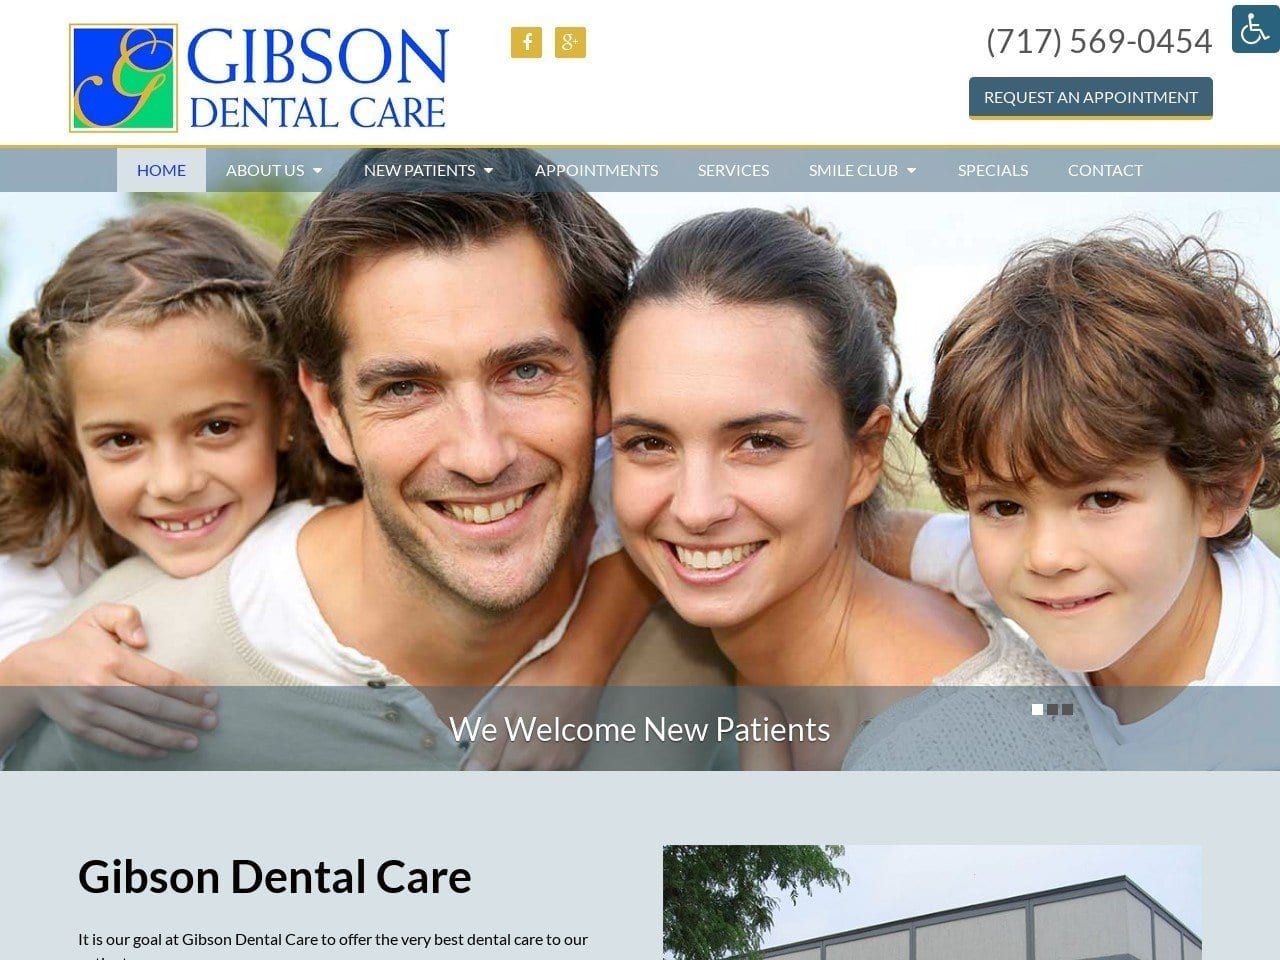 Gibson Dental Care Website Screenshot from gibsondentalcare.com